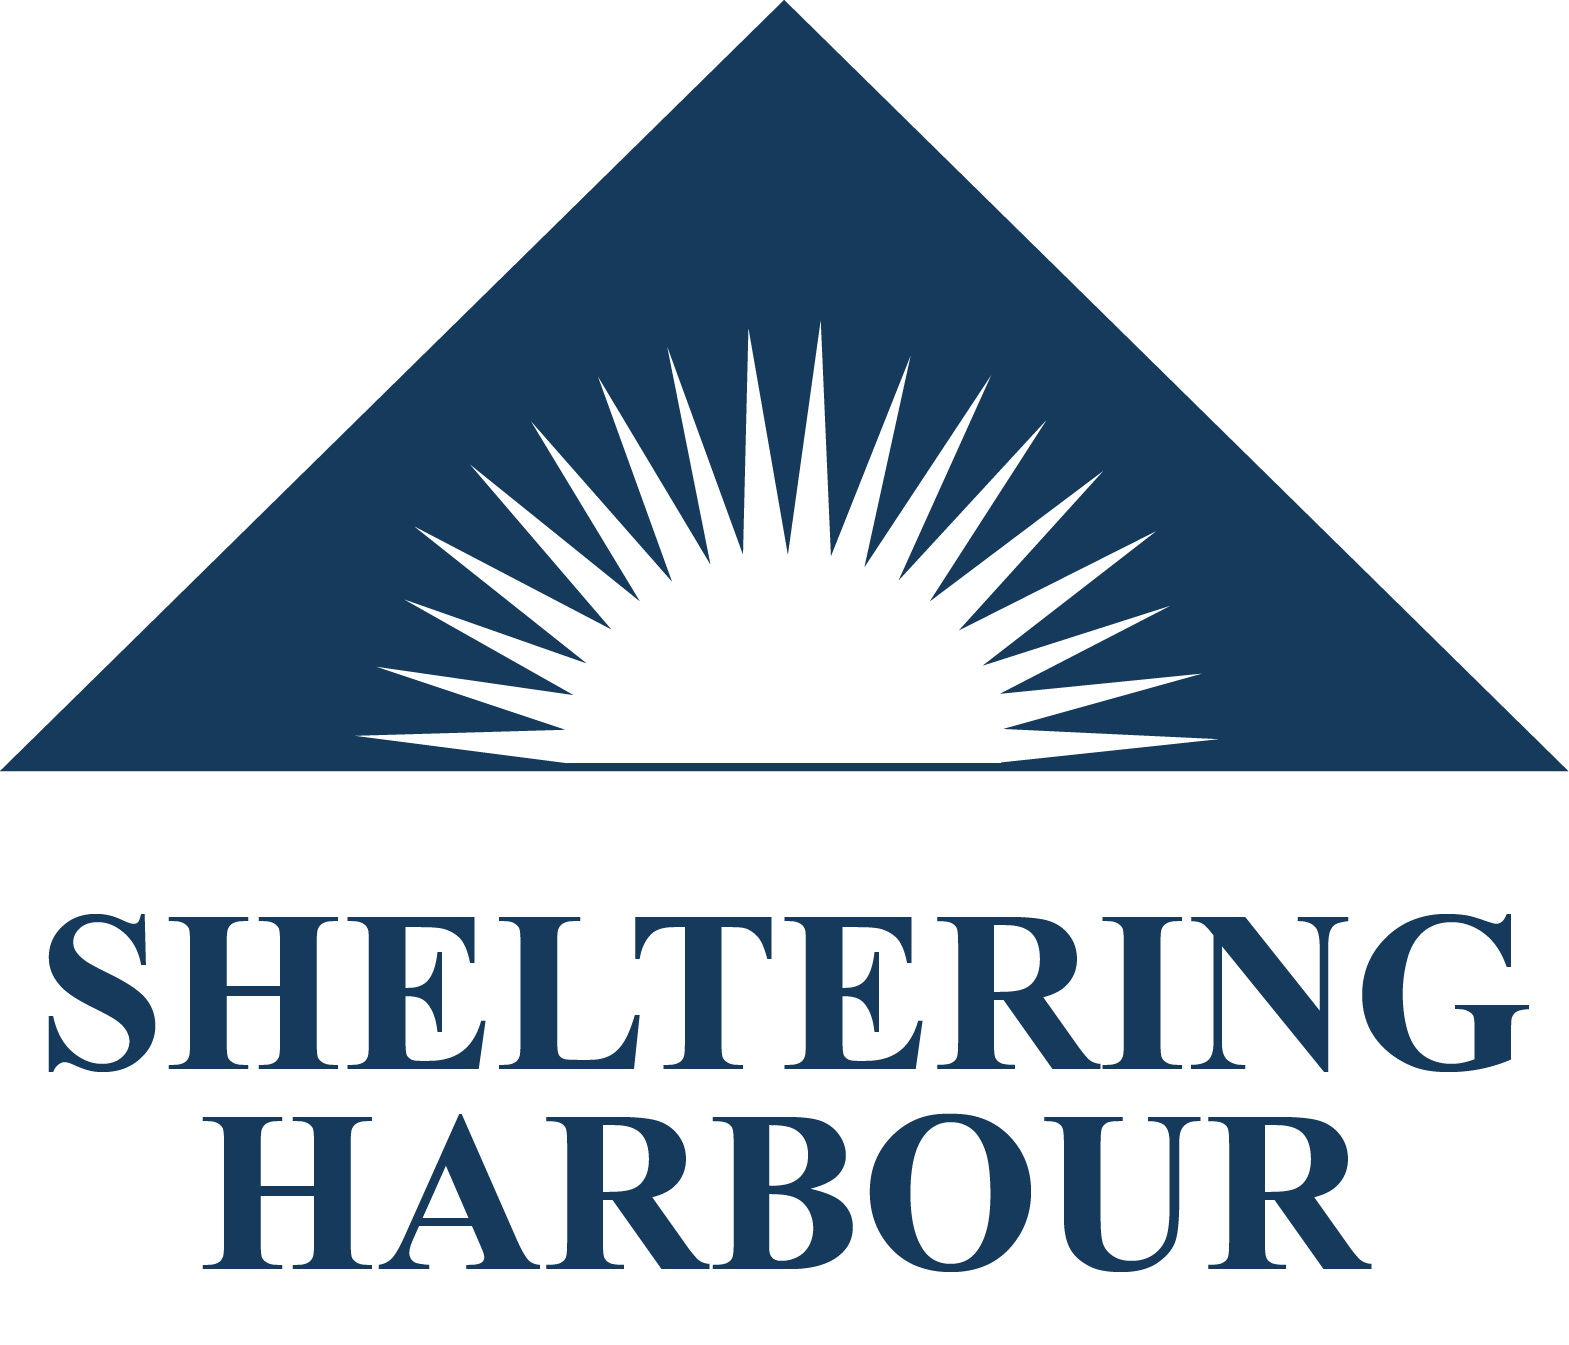 Sheltering Harbour